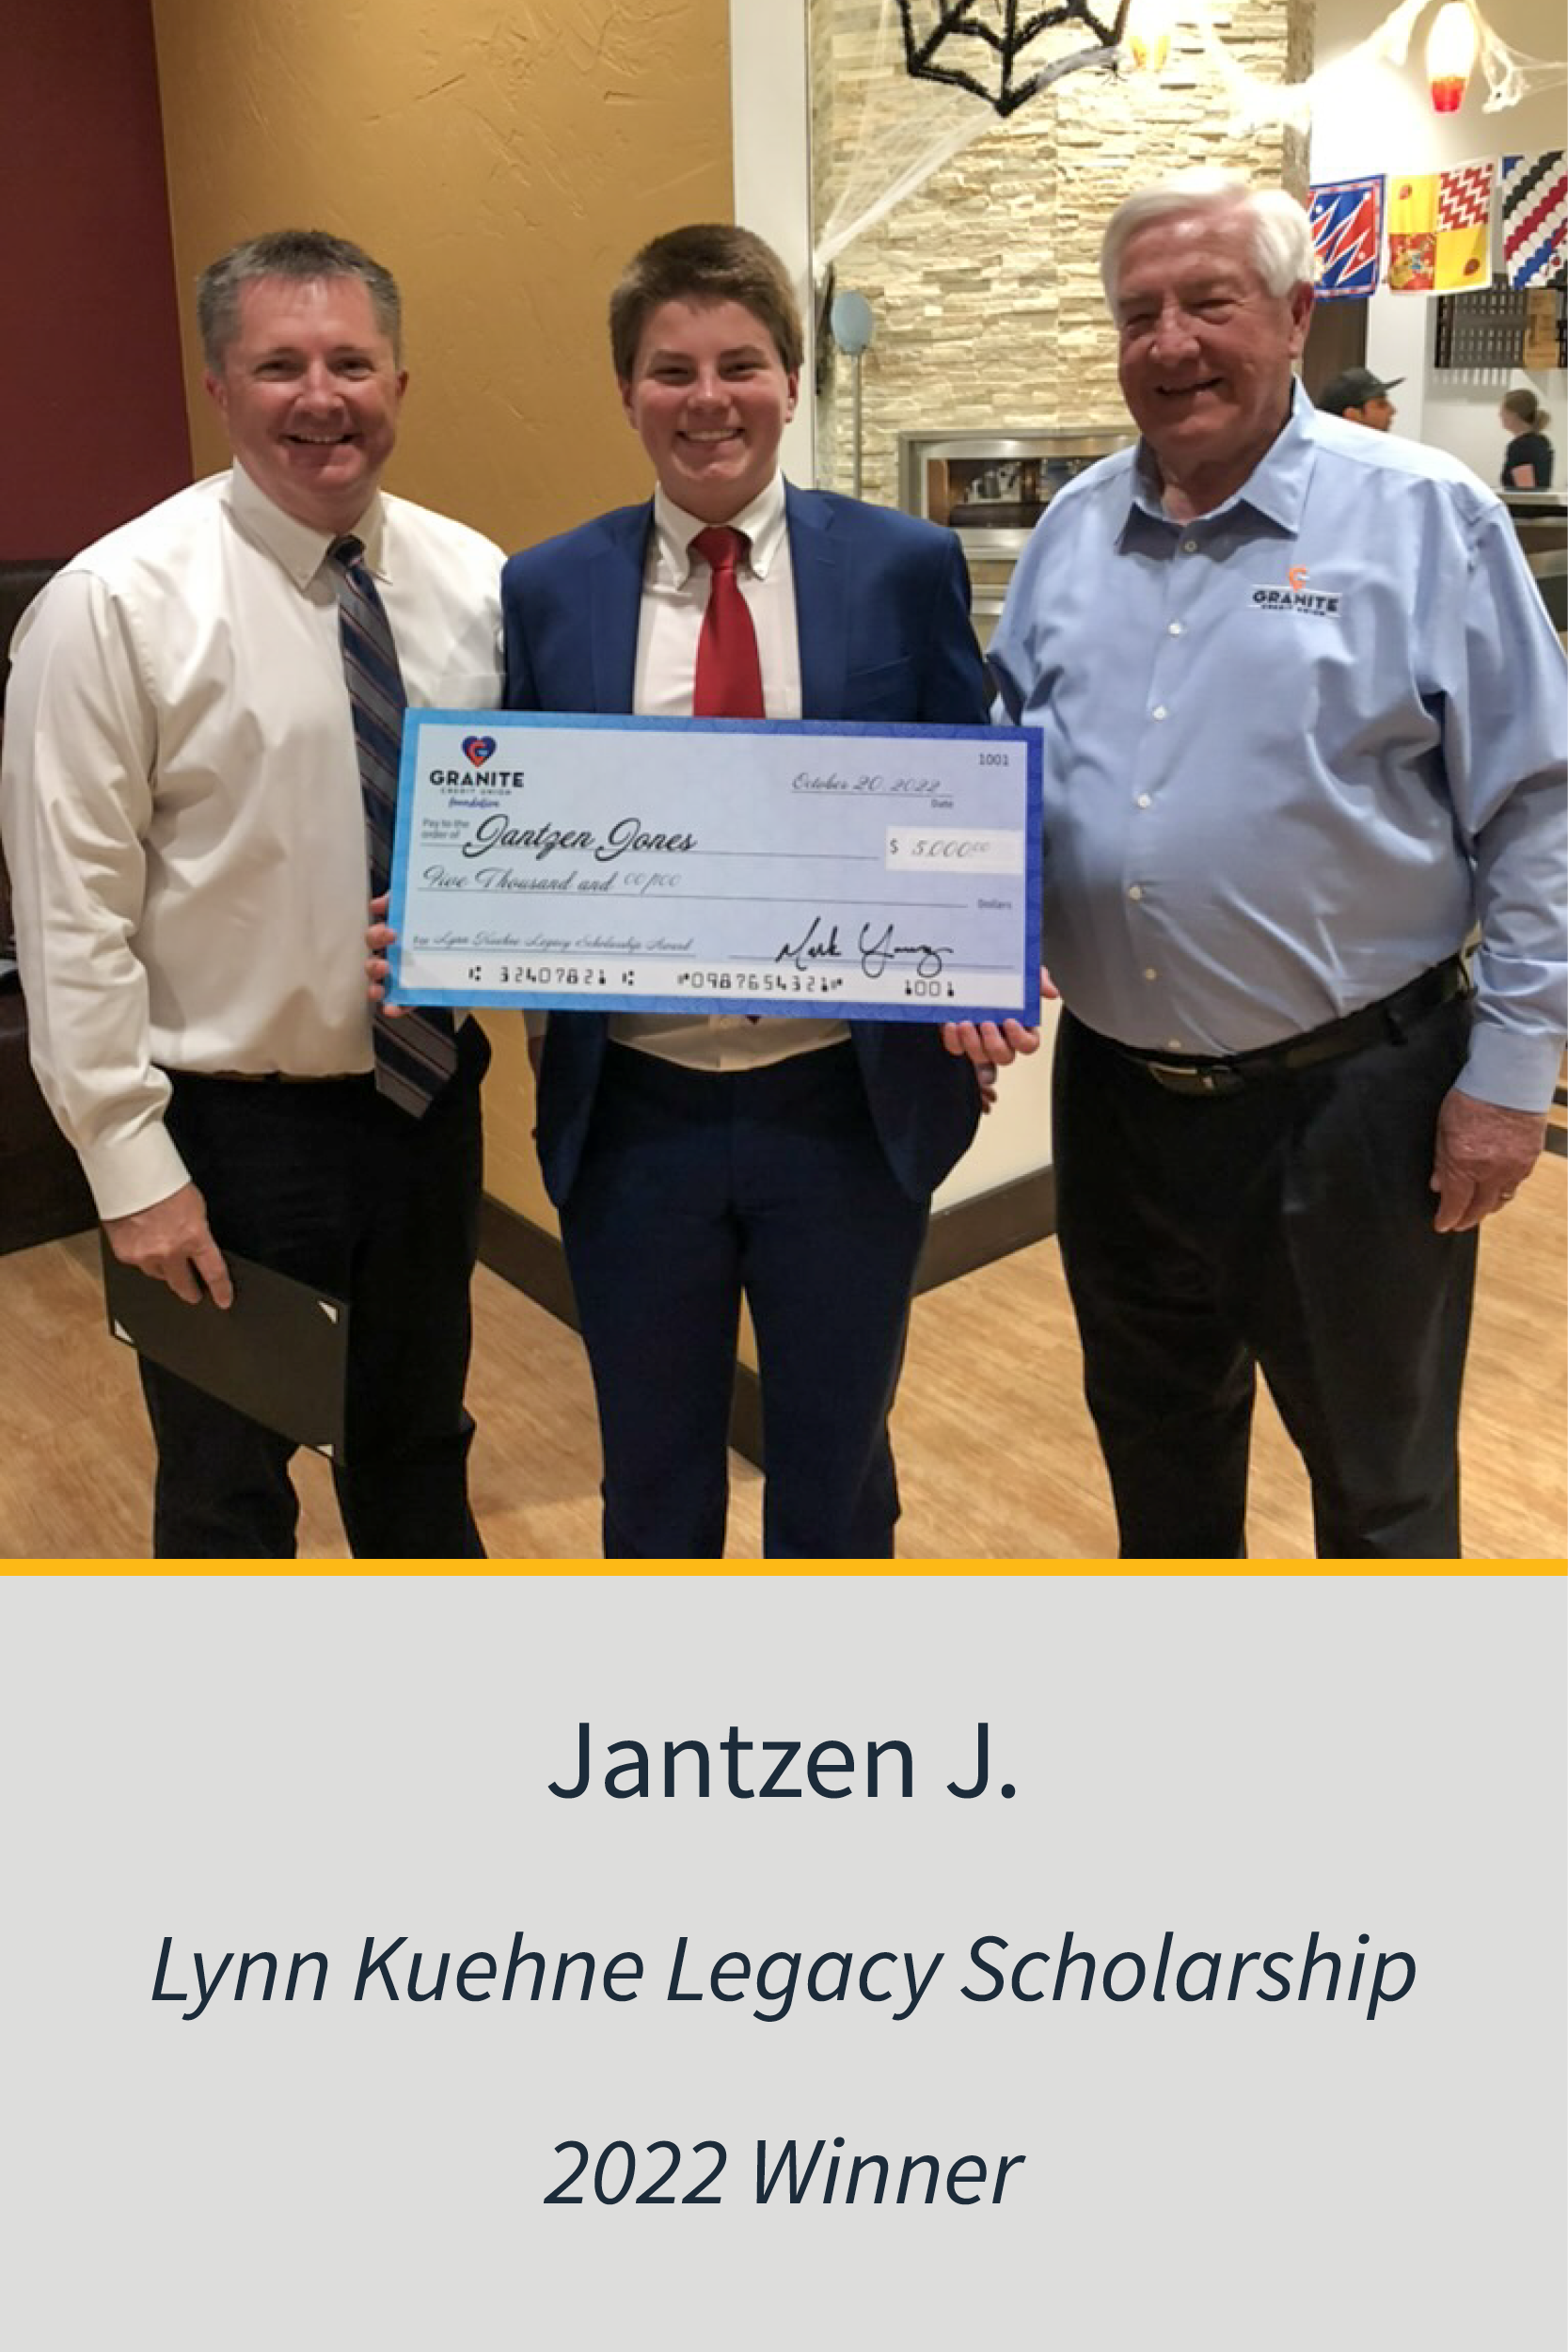 Lynn Kuehne Legacy Scholarship 2002 Winner Jantzen J.